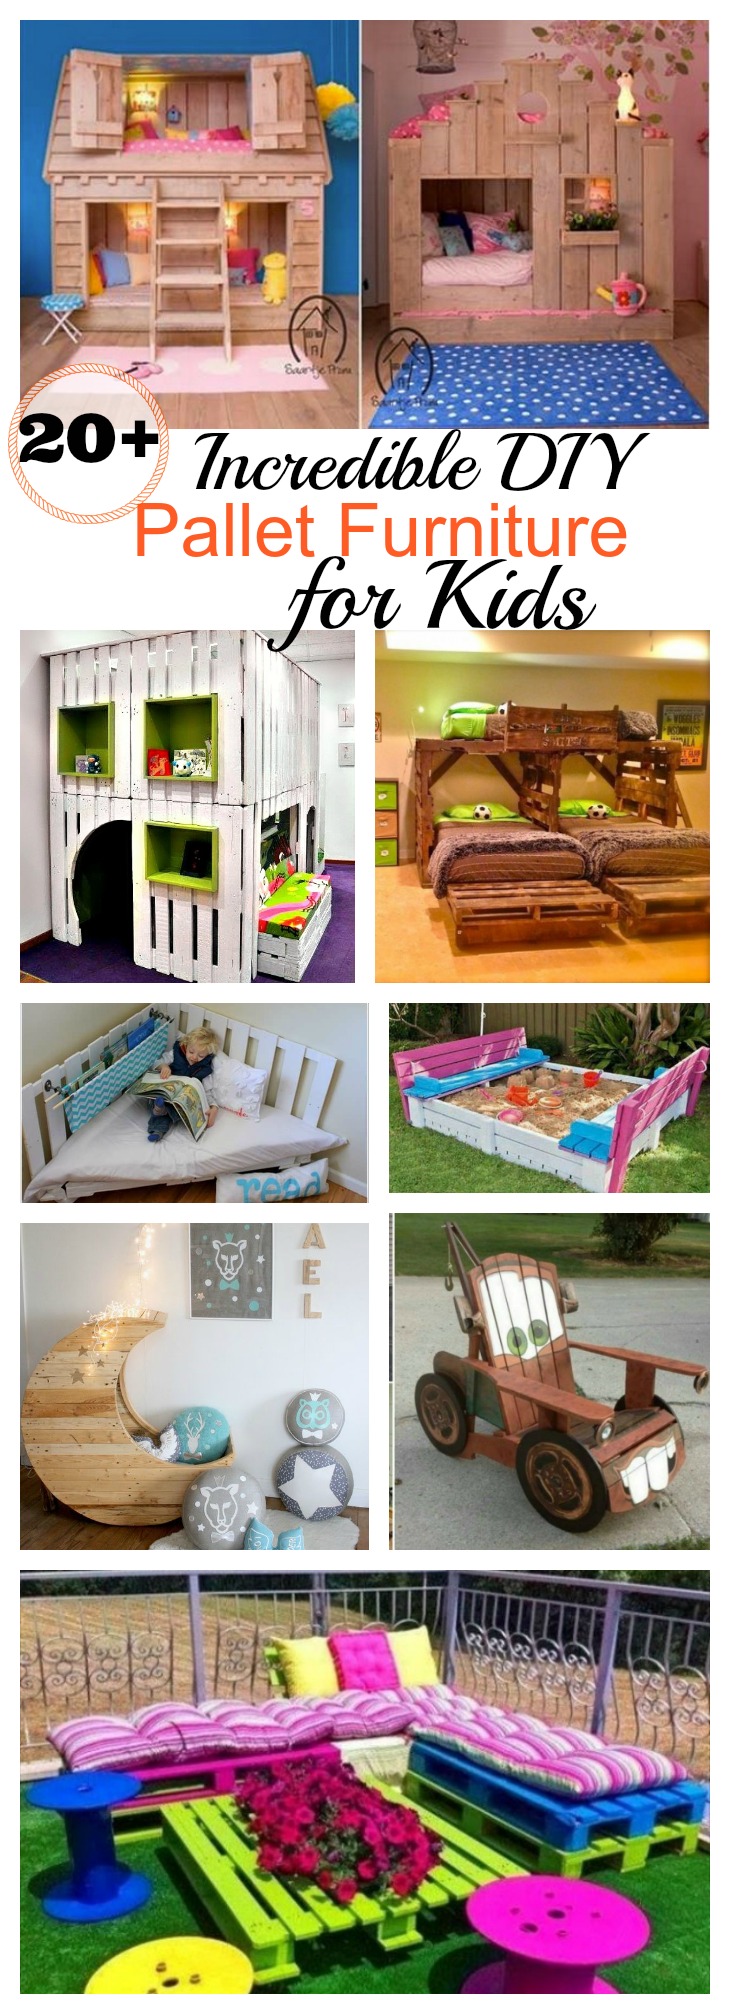 20+ Incredible DIY Pallet Furniture for Kids 